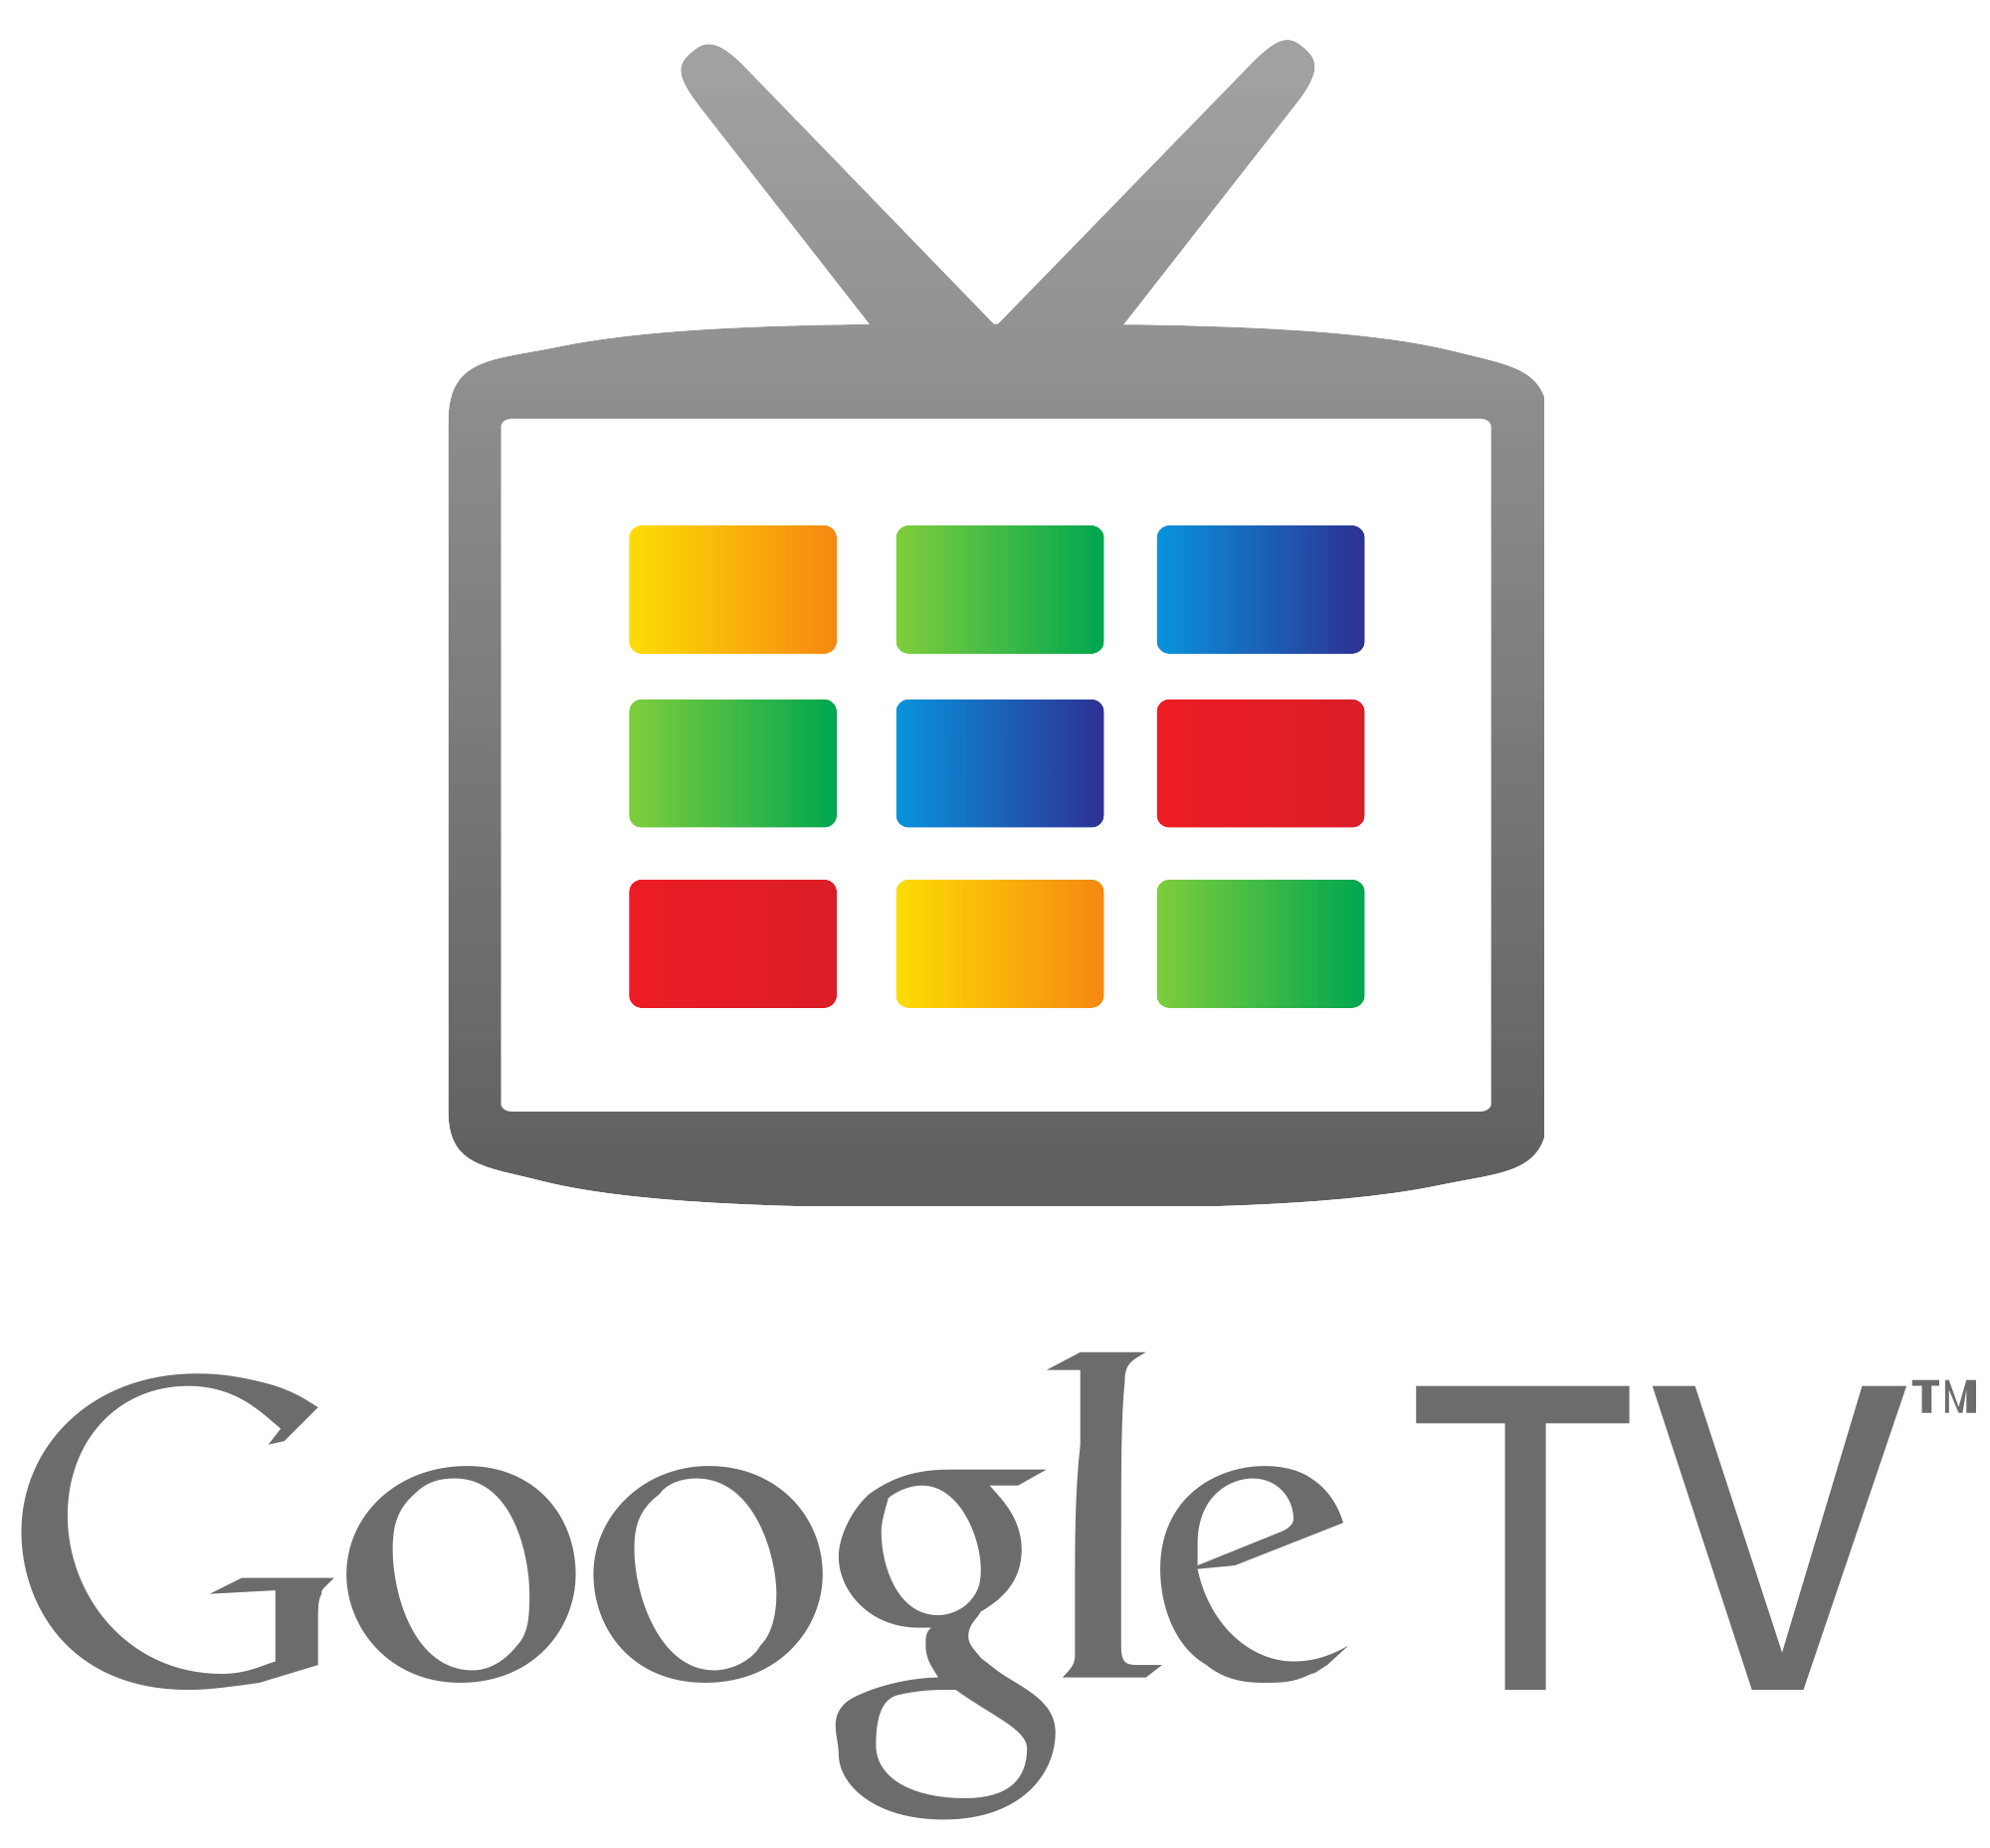 Google TV Logo - Google tv logo.svg